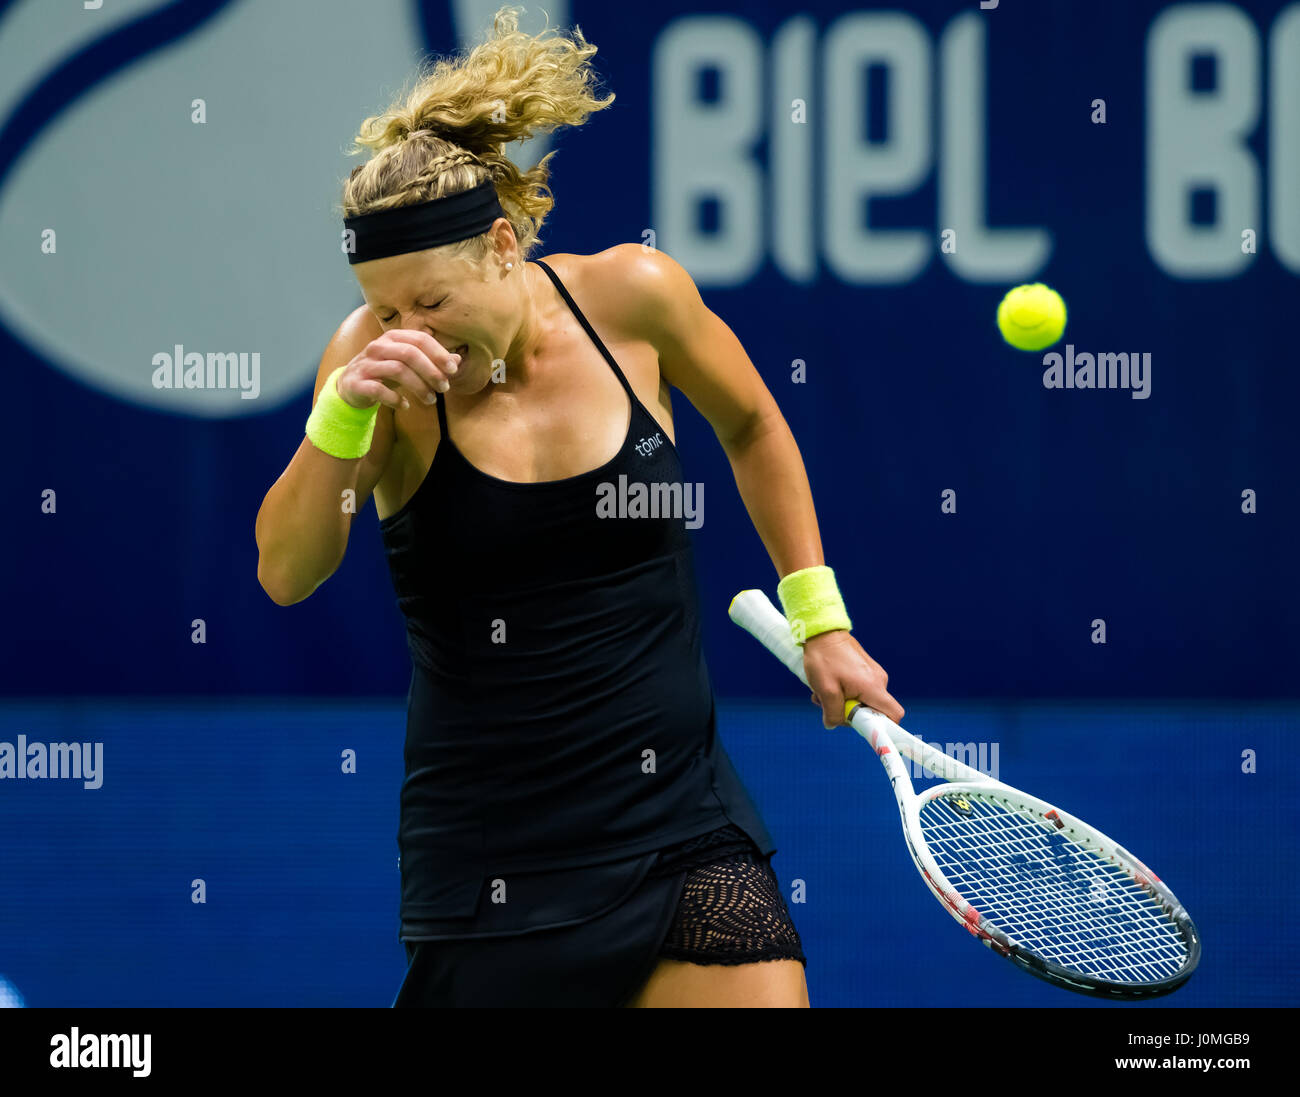 BIEL, Svizzera - 12 aprile : Laura Siegemund in azione al 2017 Ladies Open Biel WTA torneo internazionale di tennis Foto Stock